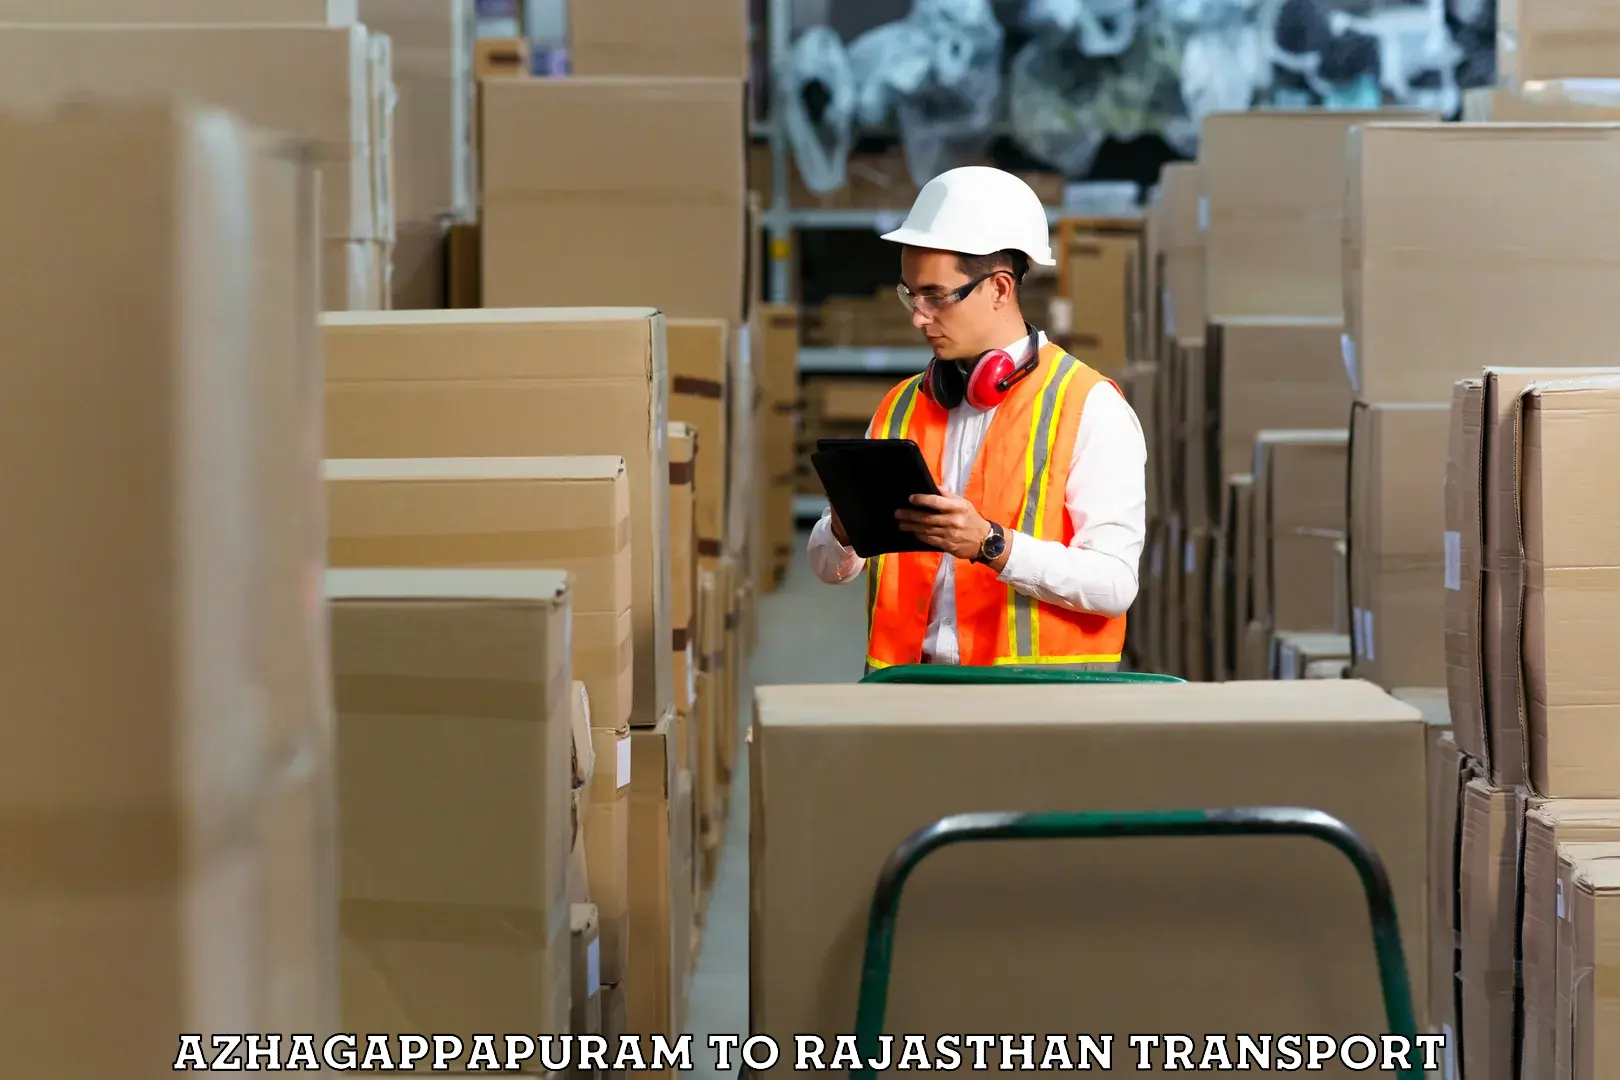 India truck logistics services Azhagappapuram to Sultana